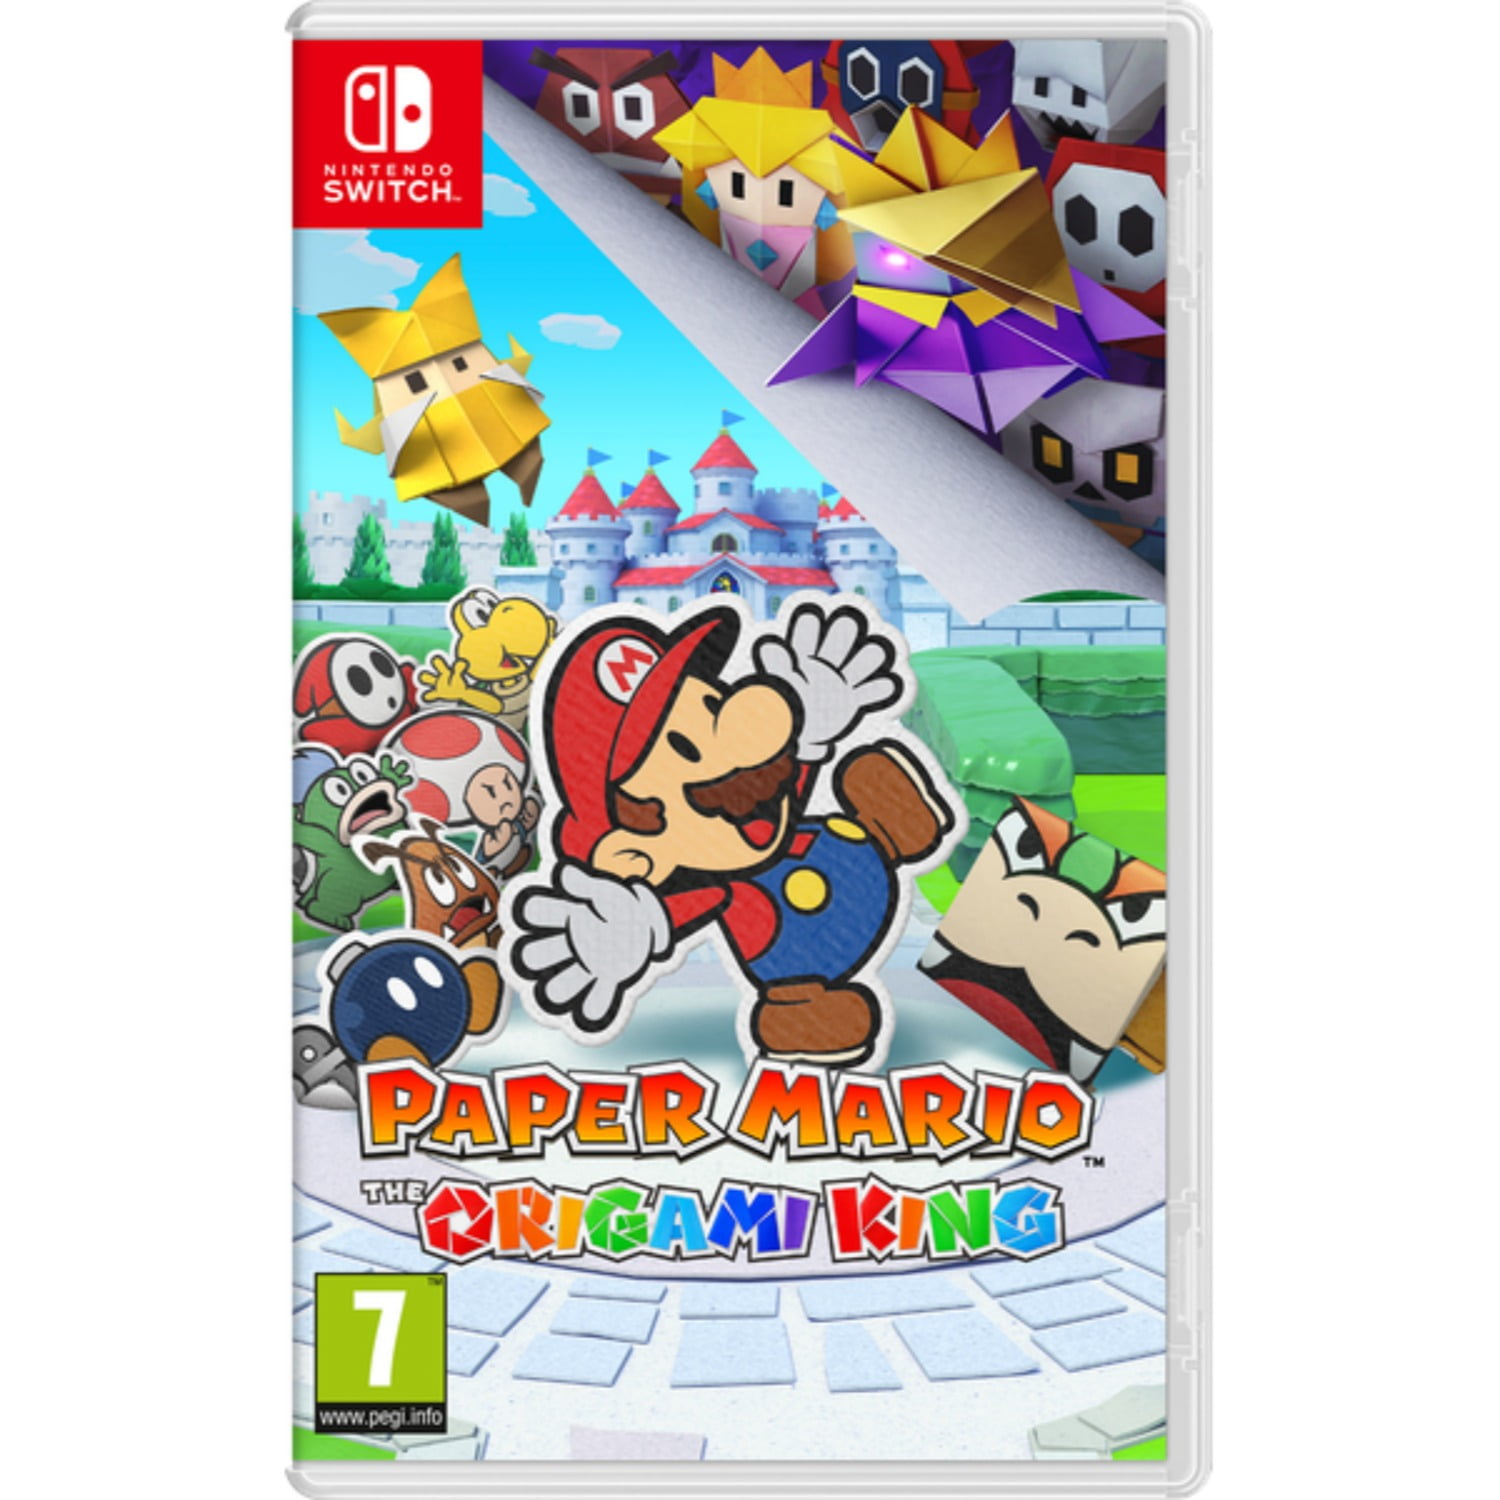 Paper Mario: The King Video Game, Import Region Free, Nintendo Switch - Walmart.com